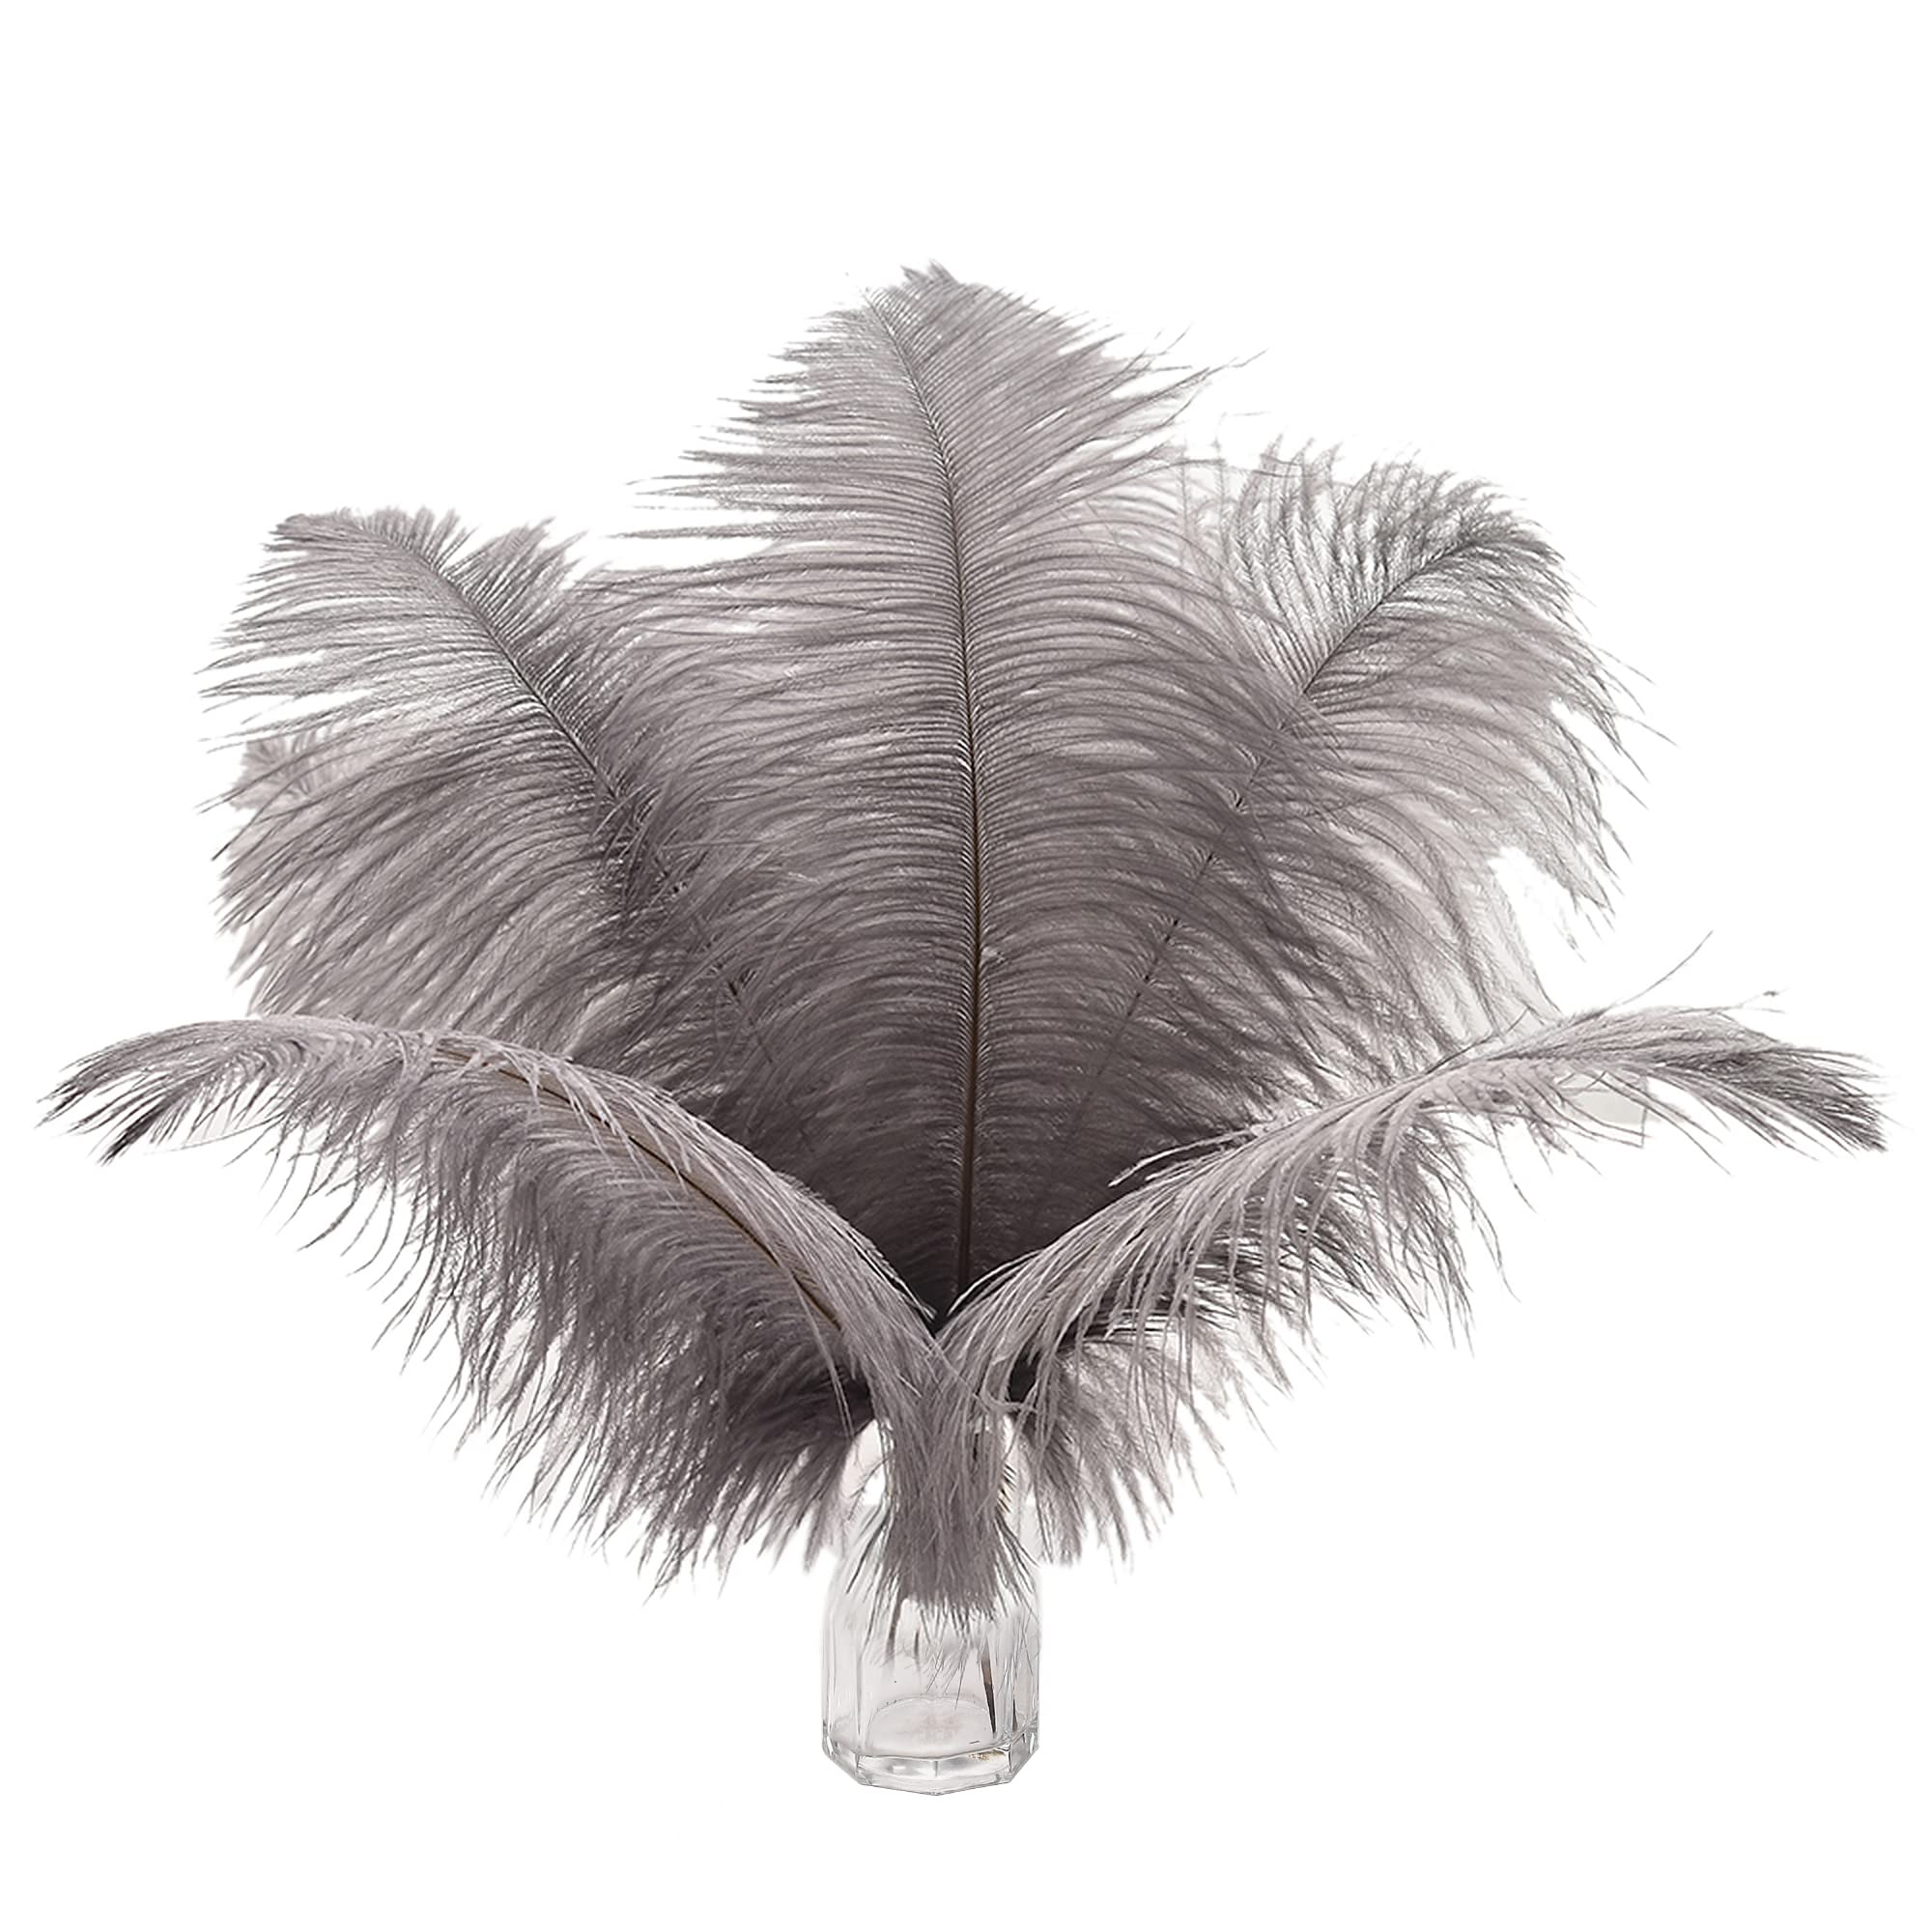 Ballinger Gray Ostrich Feathers Bulk - 12Pcs 12-14inch Natural